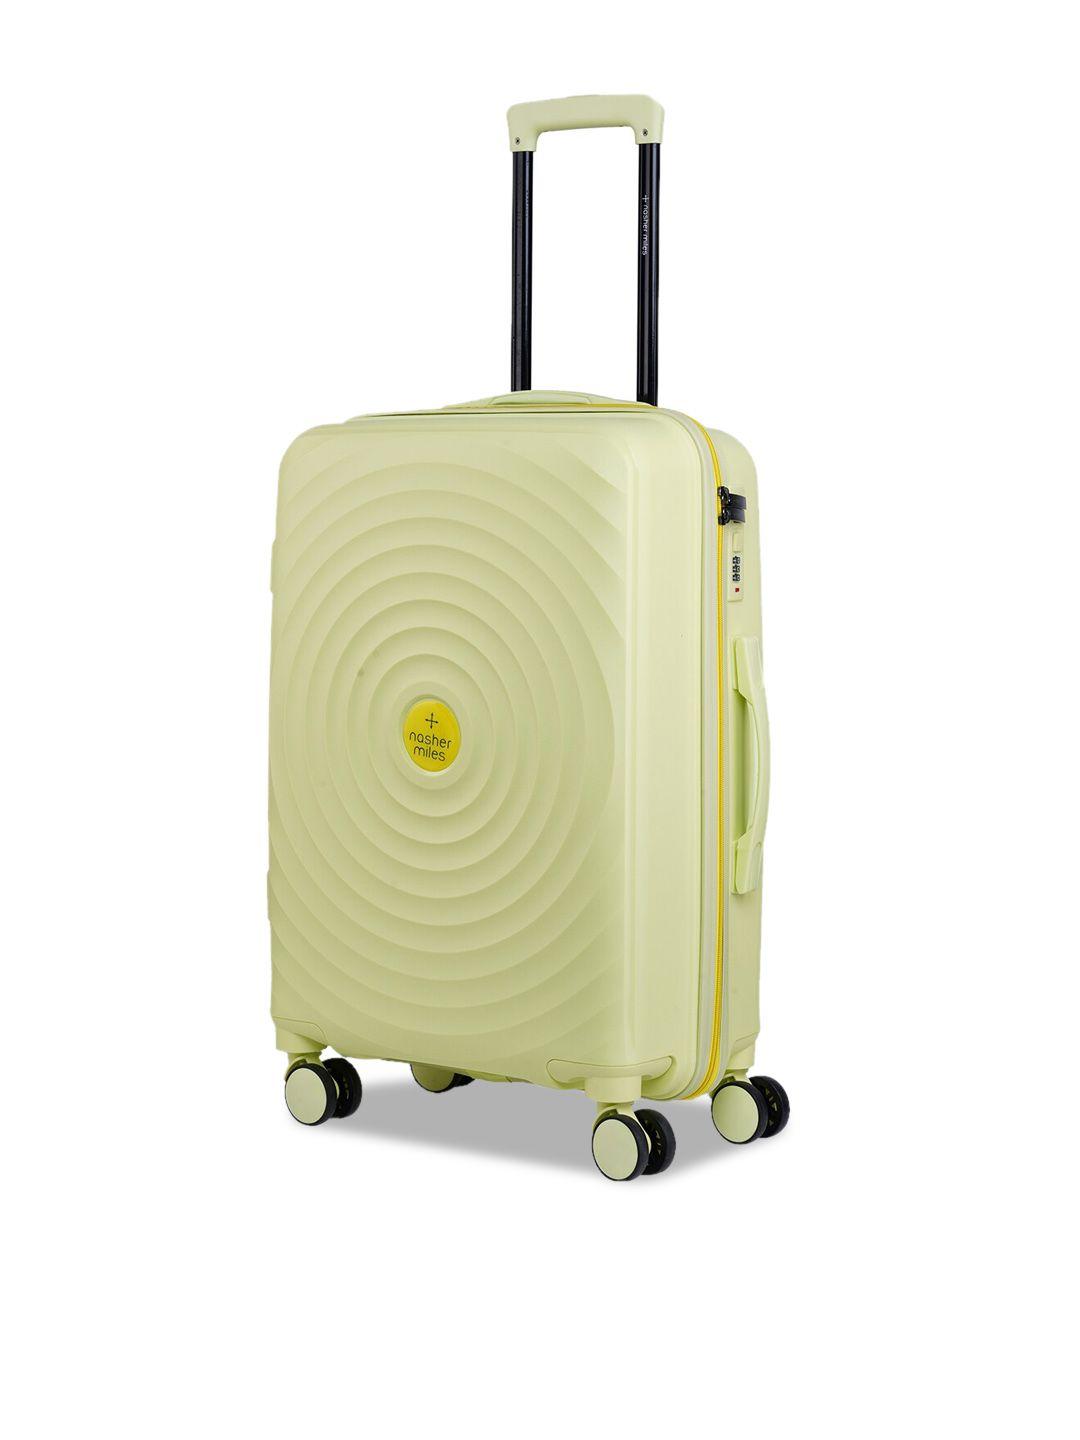 nasher miles goa textured hard-sided medium trolley suitcase